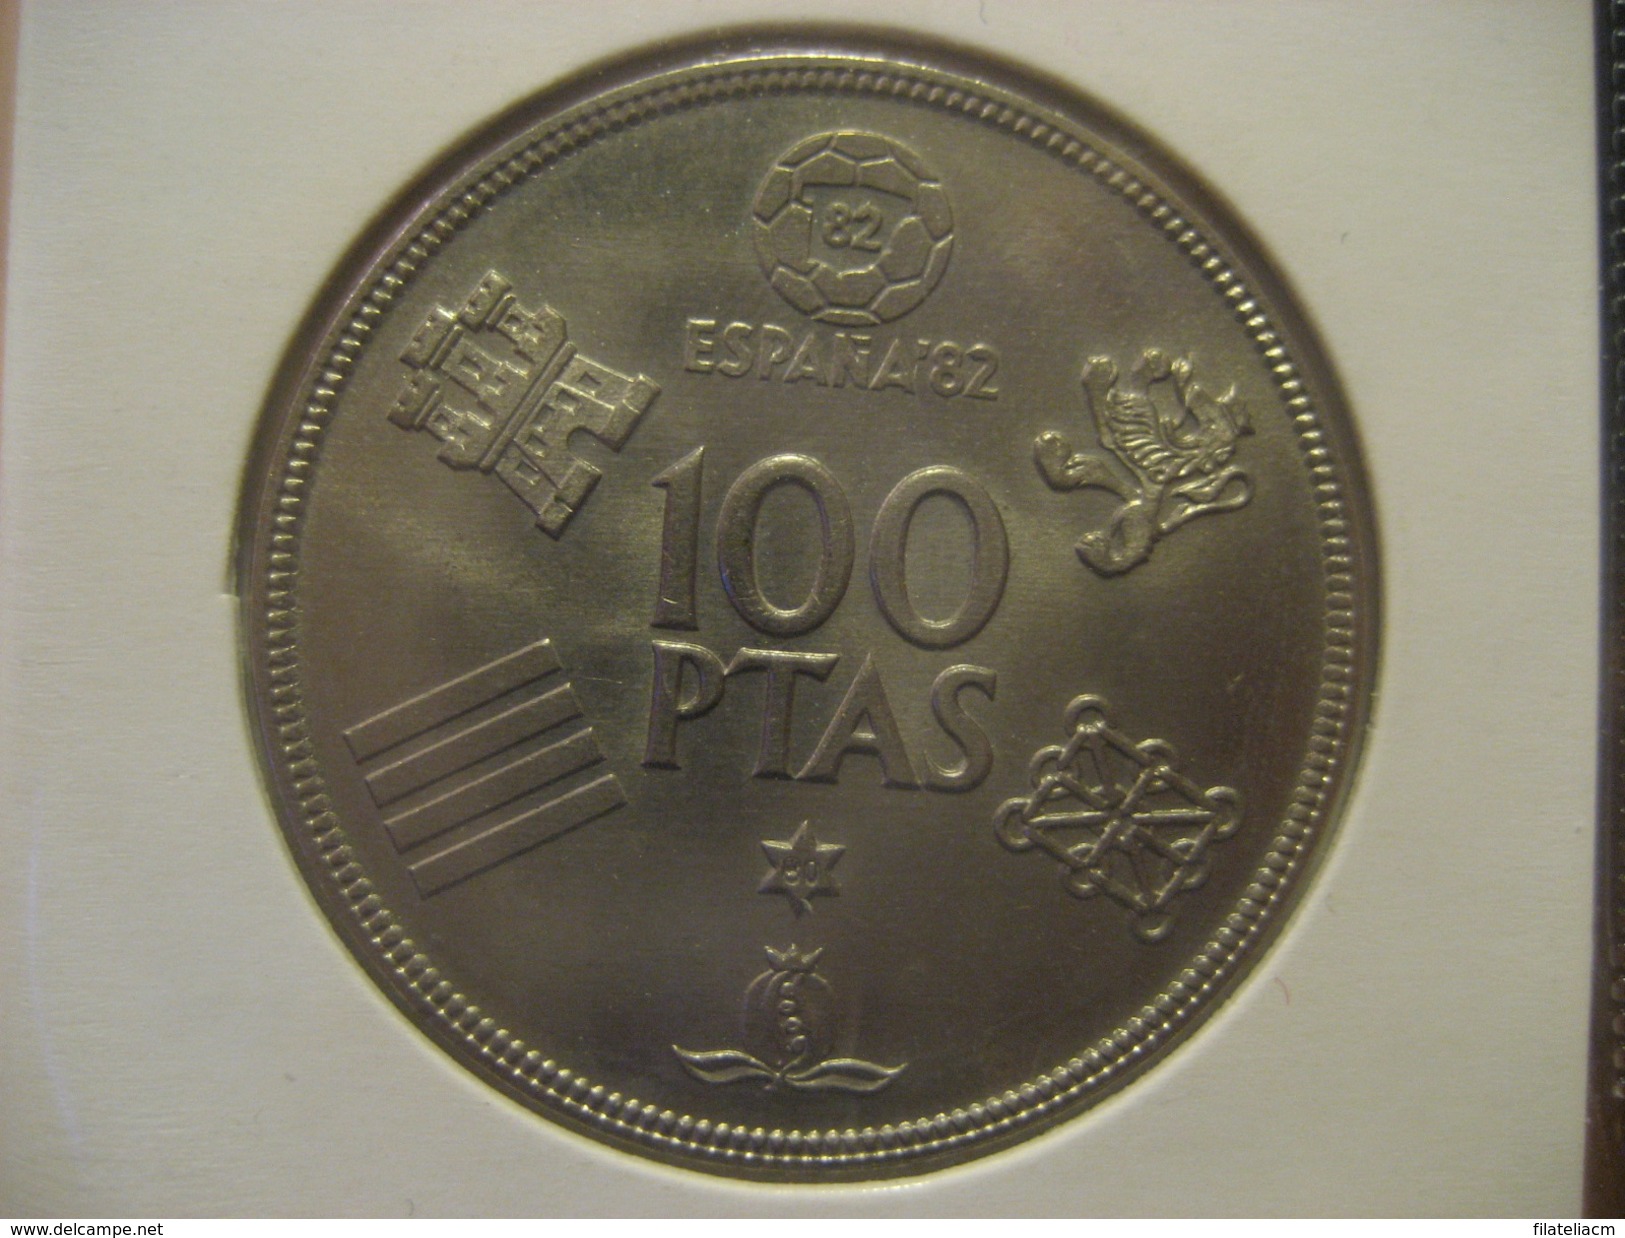 100 Pesetas 1980 (80) Football World Championship 1982 SPAIN Juan Carlos I Good Condition Coin - 100 Pesetas